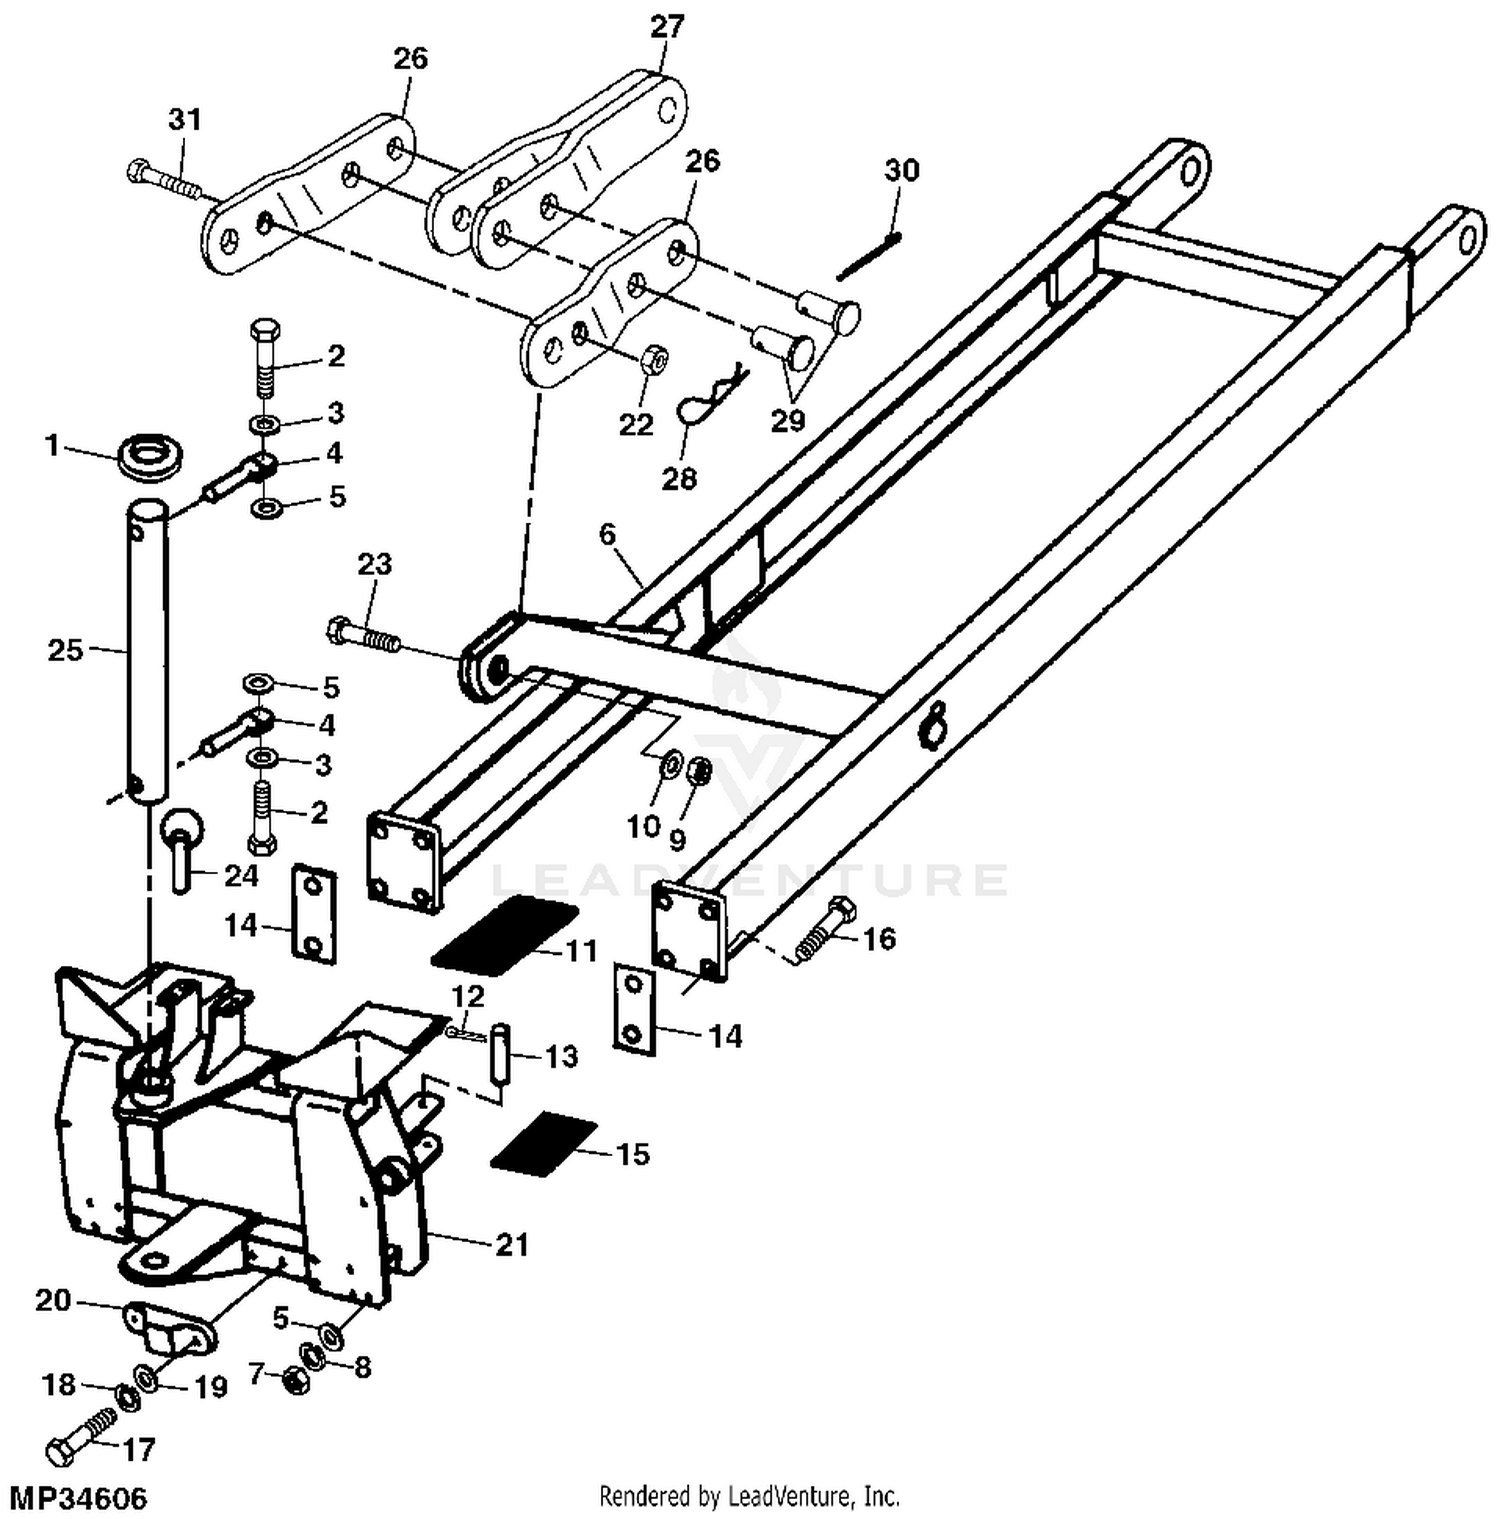 John Deere 7, 8, 8A, 8B, 10 and 10A Backhoes Parts Catalog (PC1969)